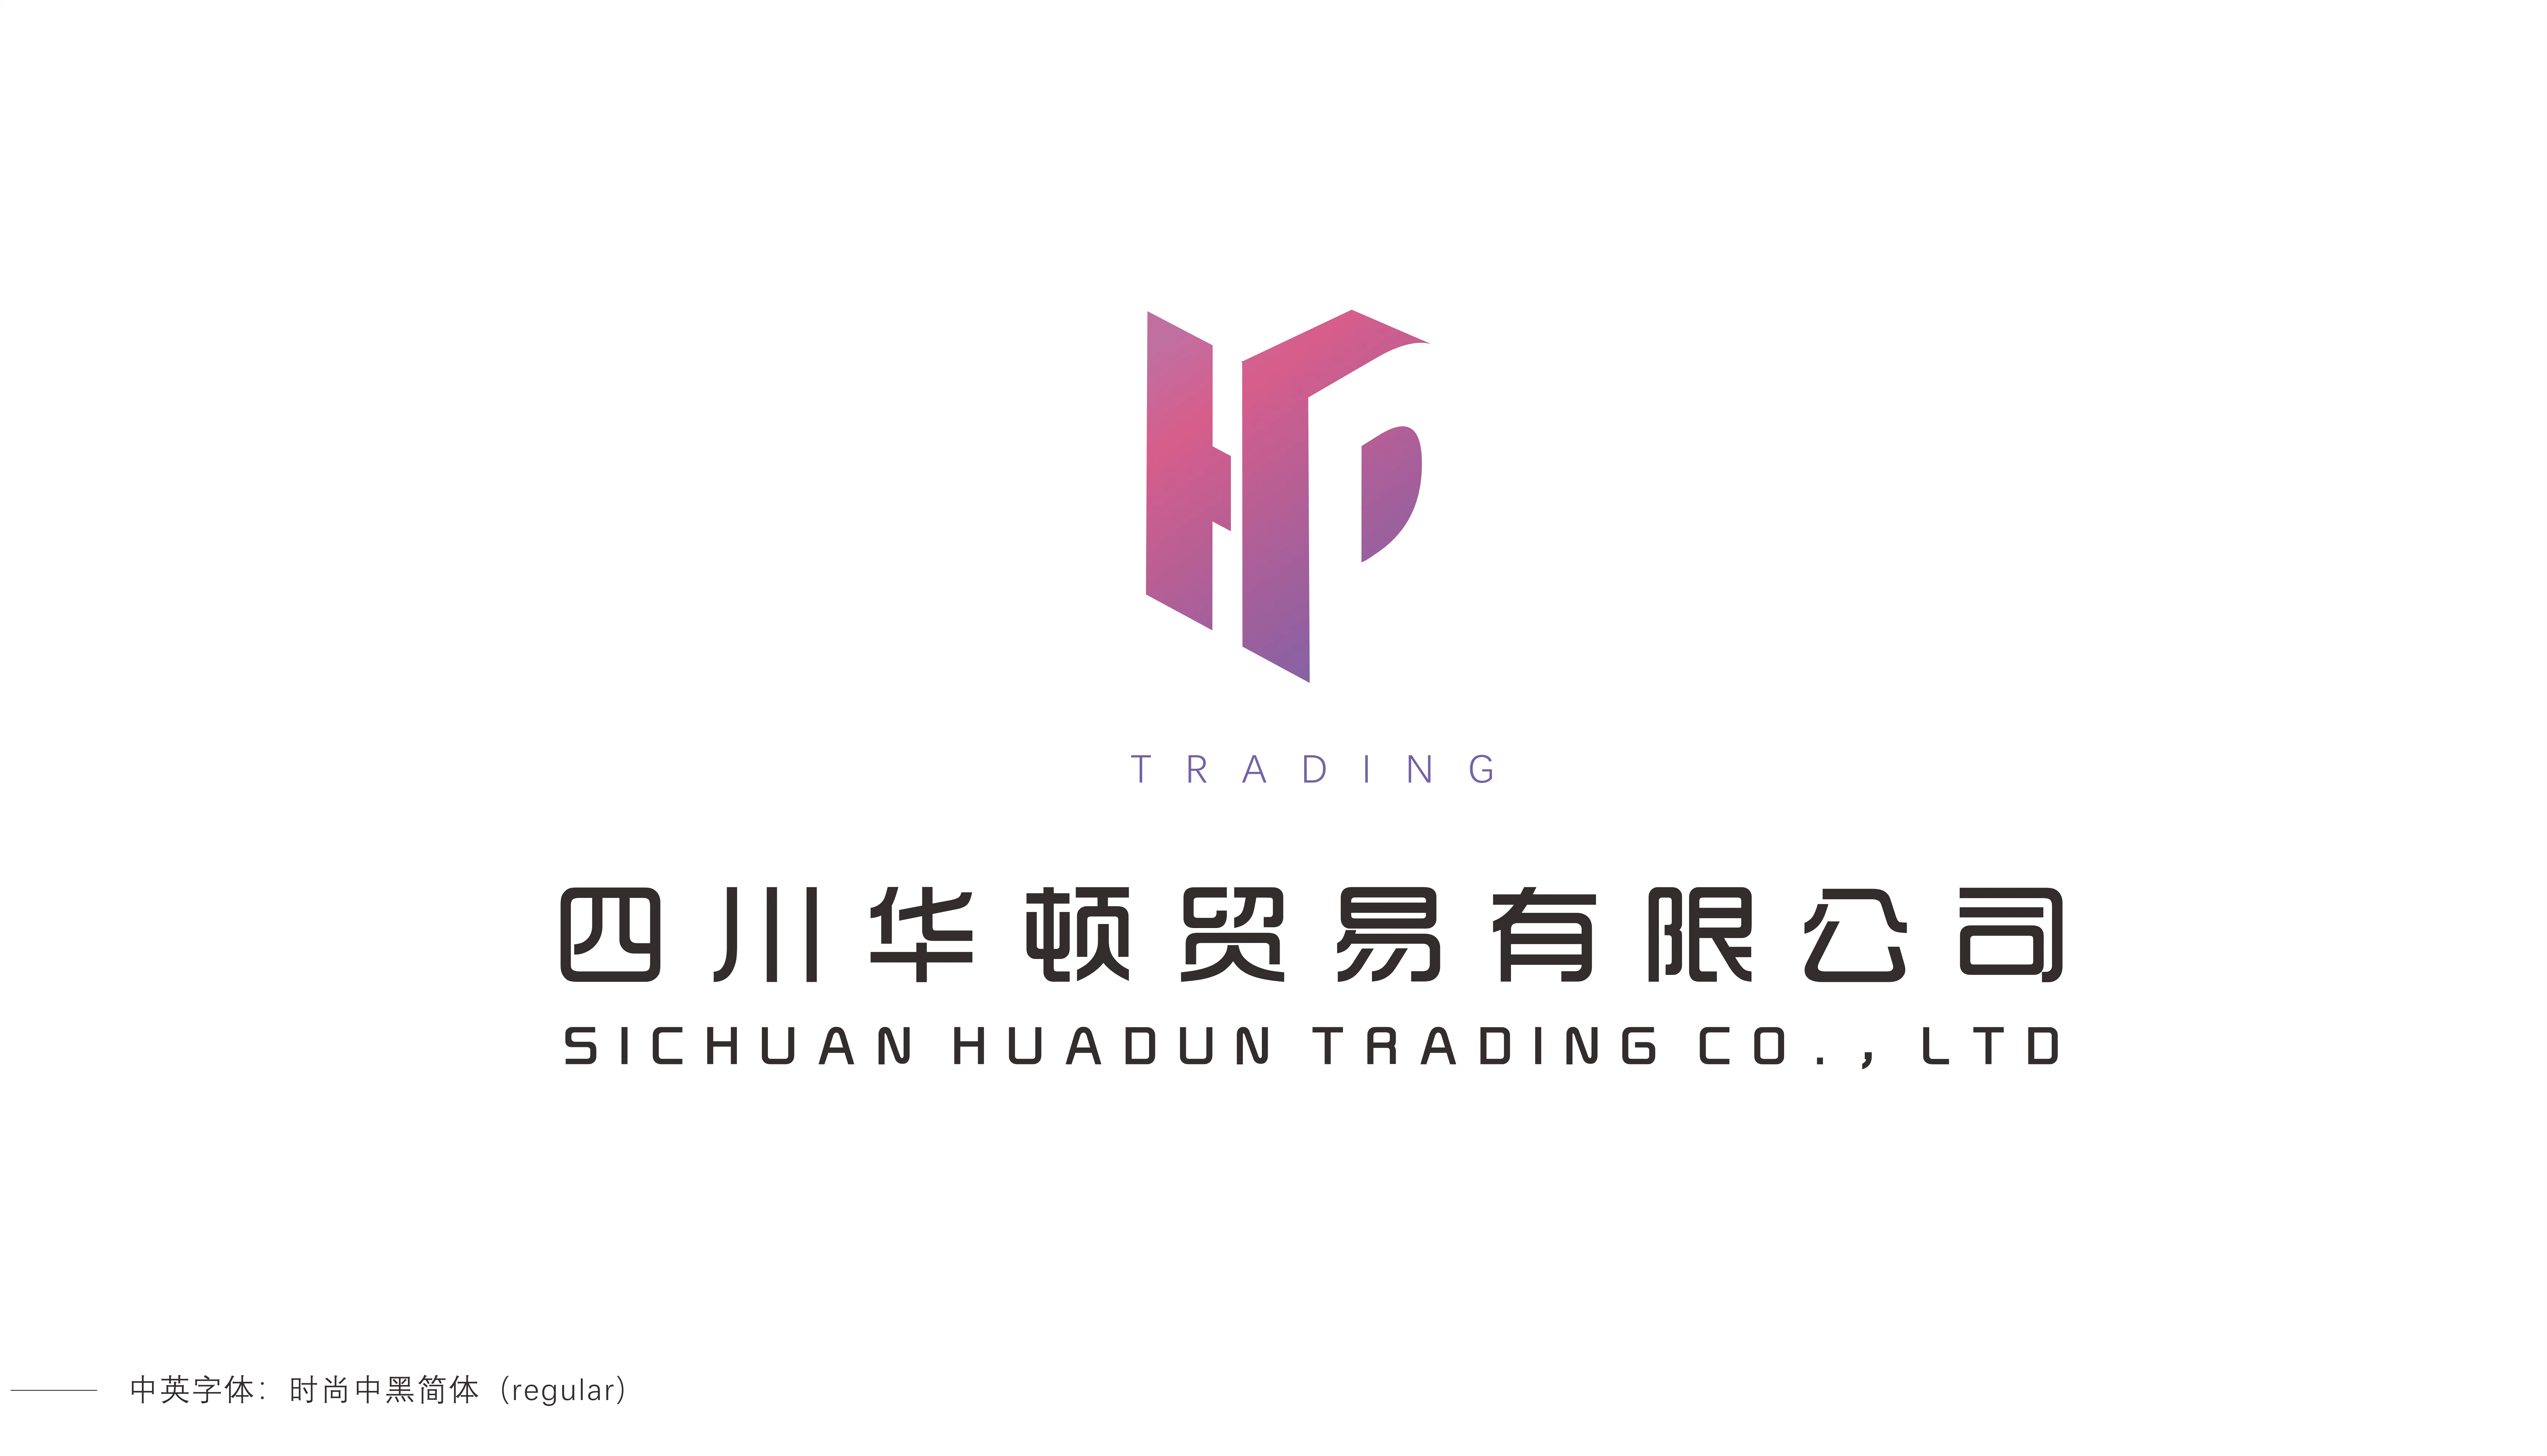 Sichuan Huadun Trading Co., Ltd.